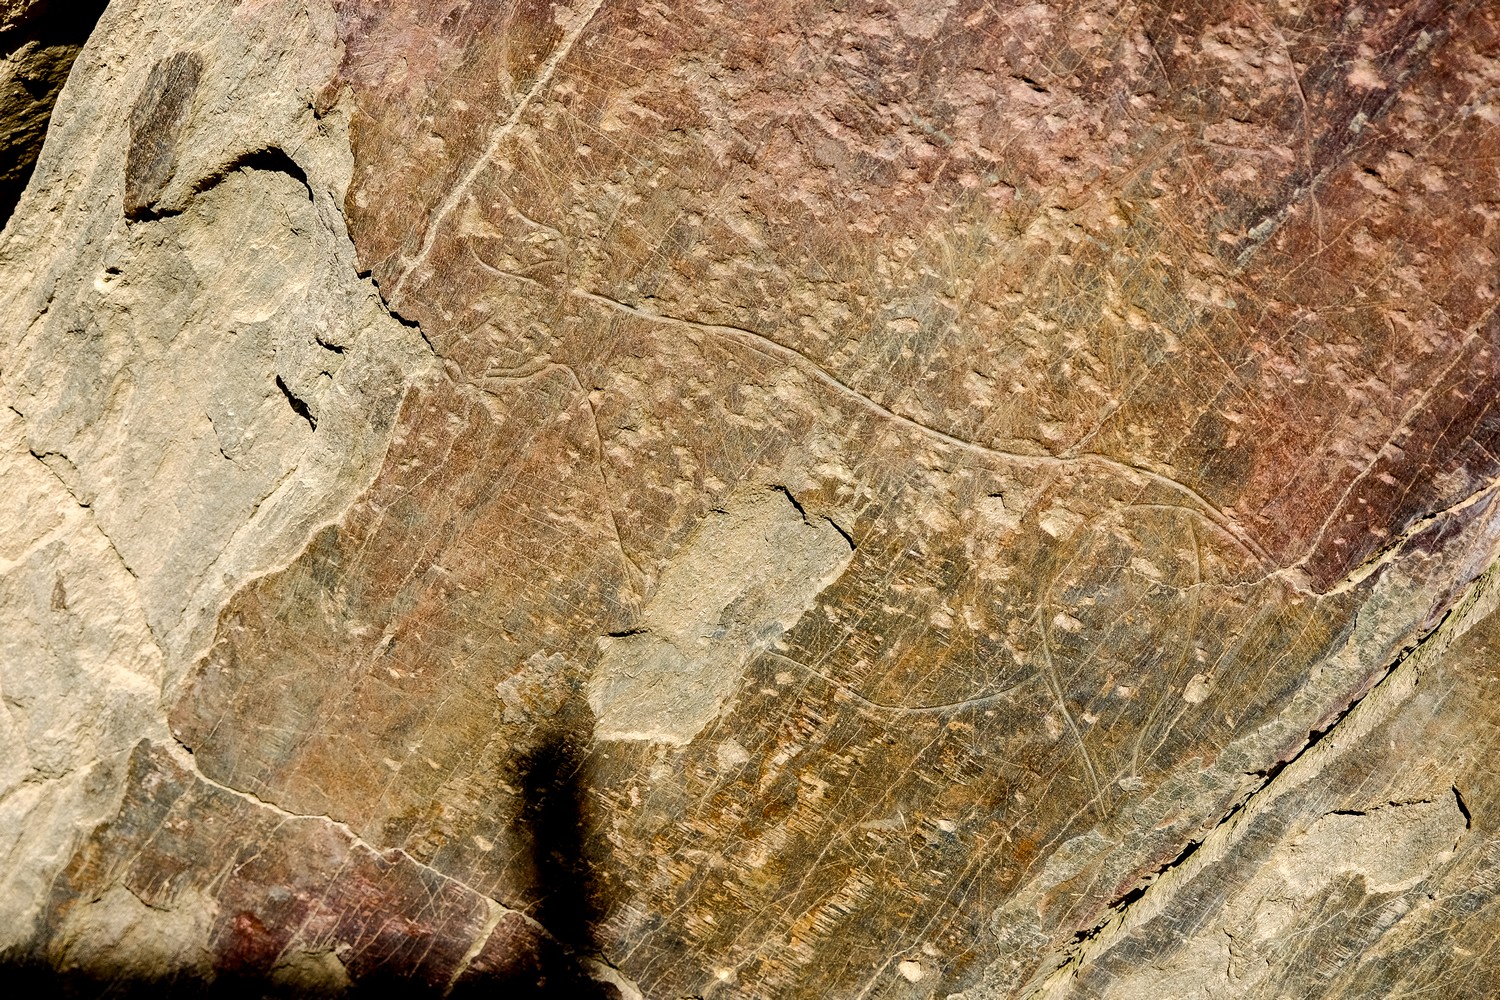  gravure rupestres du site de Penascosa, Portugal 